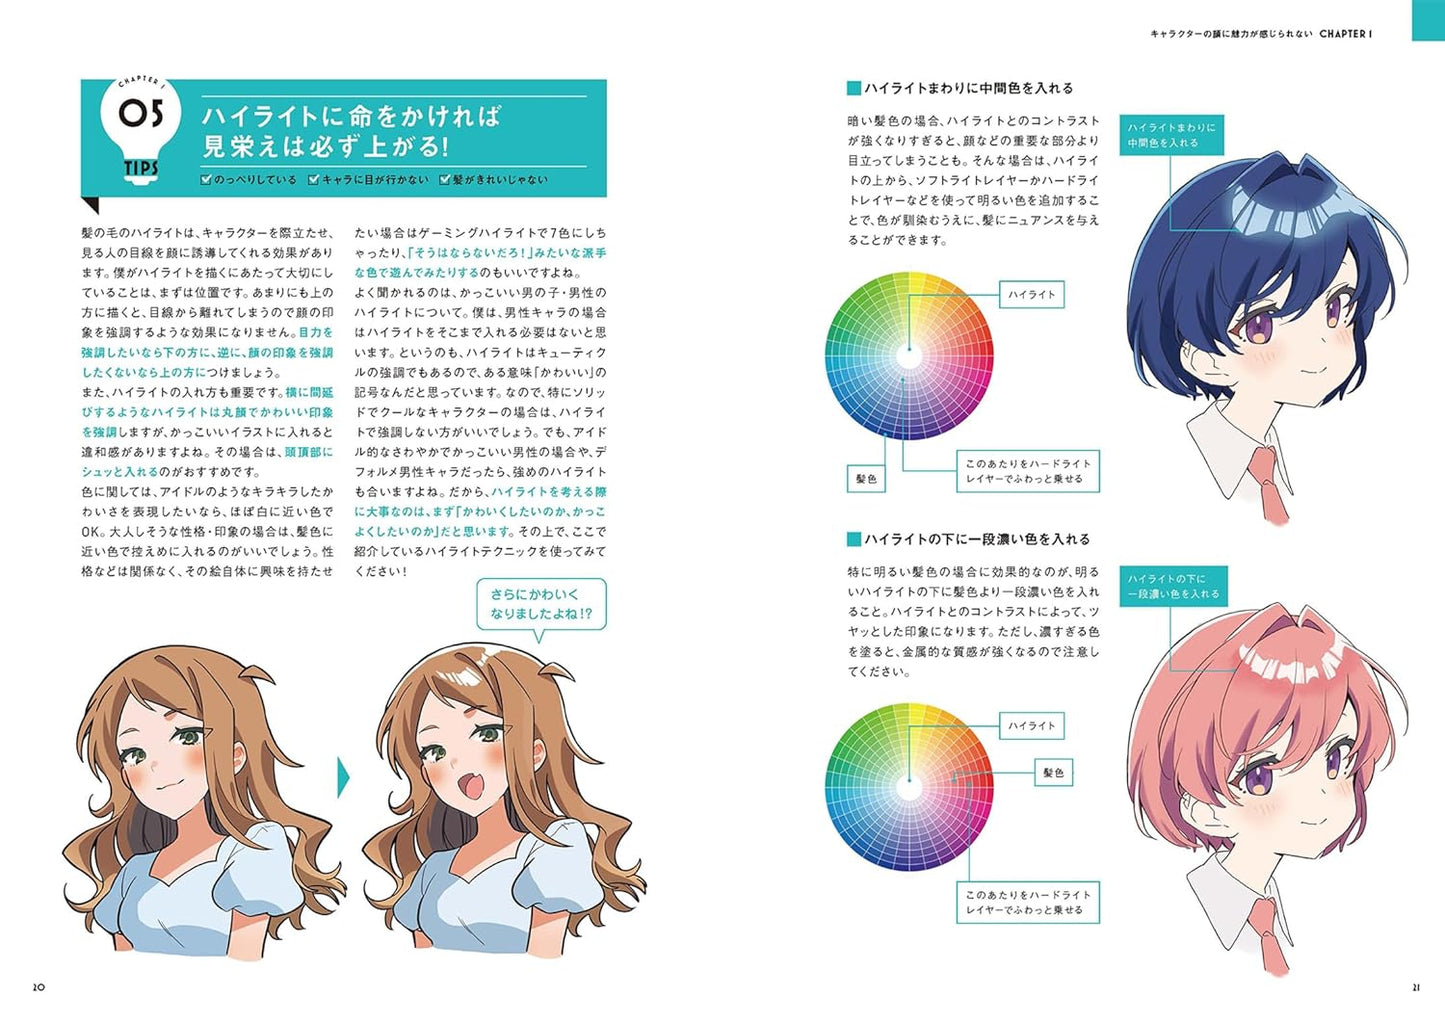 Saito Naoki Style Illustration Finishing Professional Techniques Encyclopedia